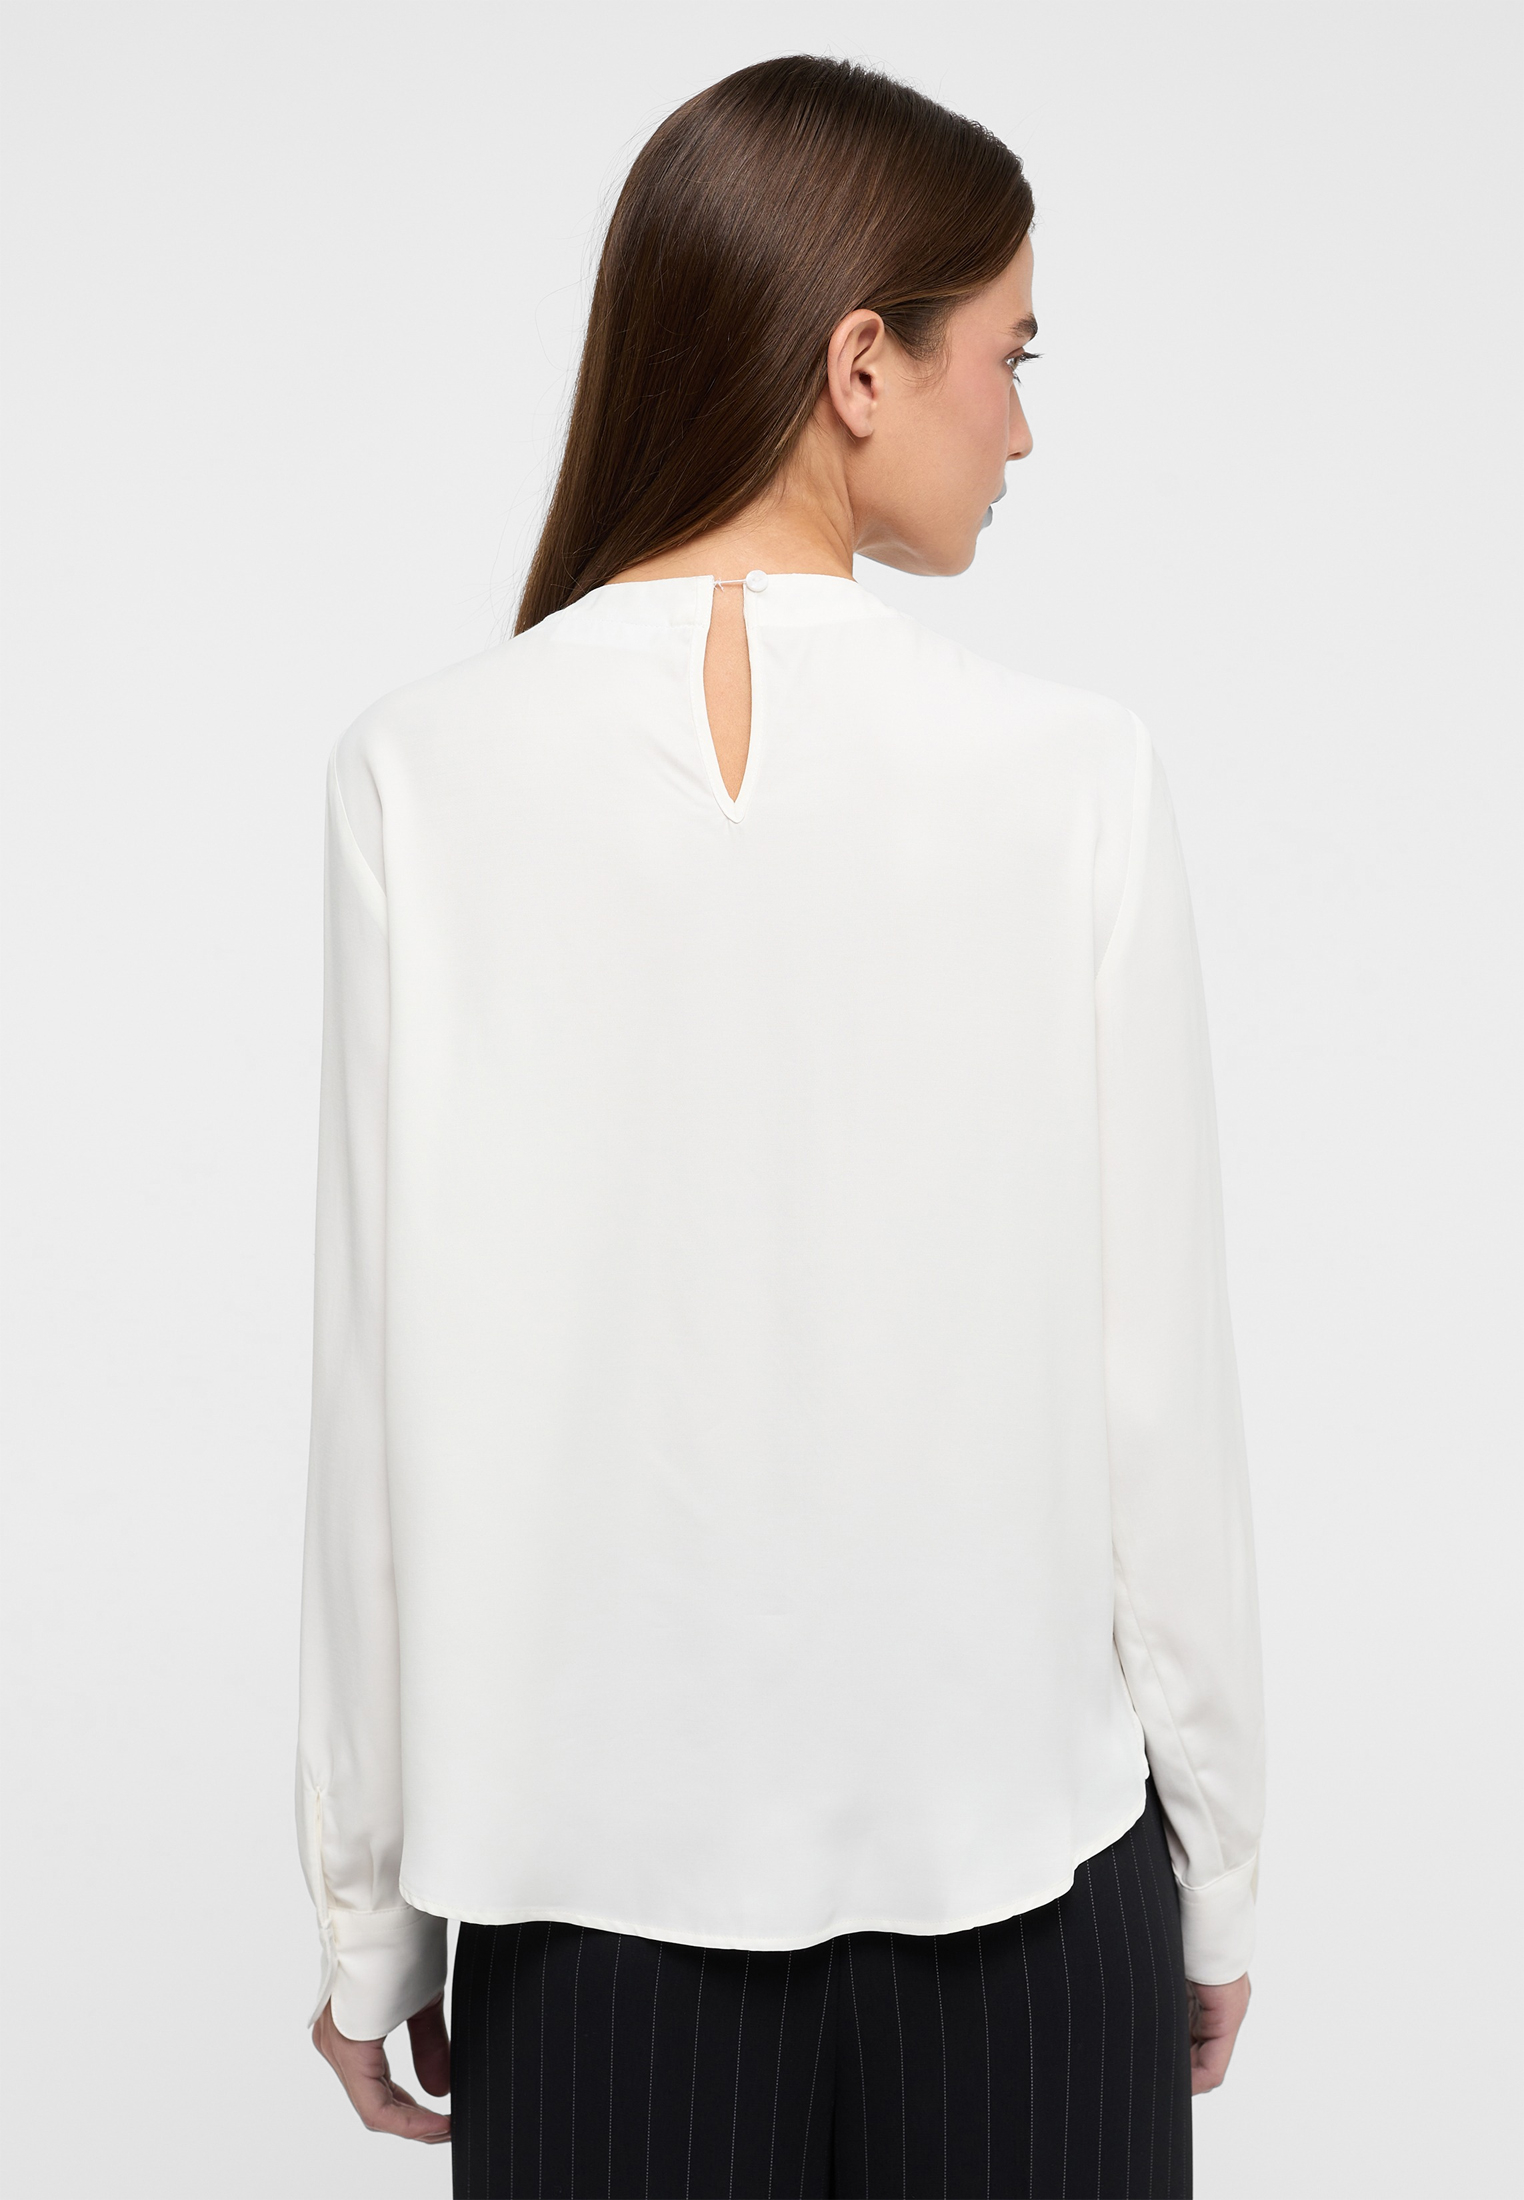 Viscose Shirt Bluse in off-white unifarben | off-white | 40 | Langarm |  2BL04240-00-02-40-1/1